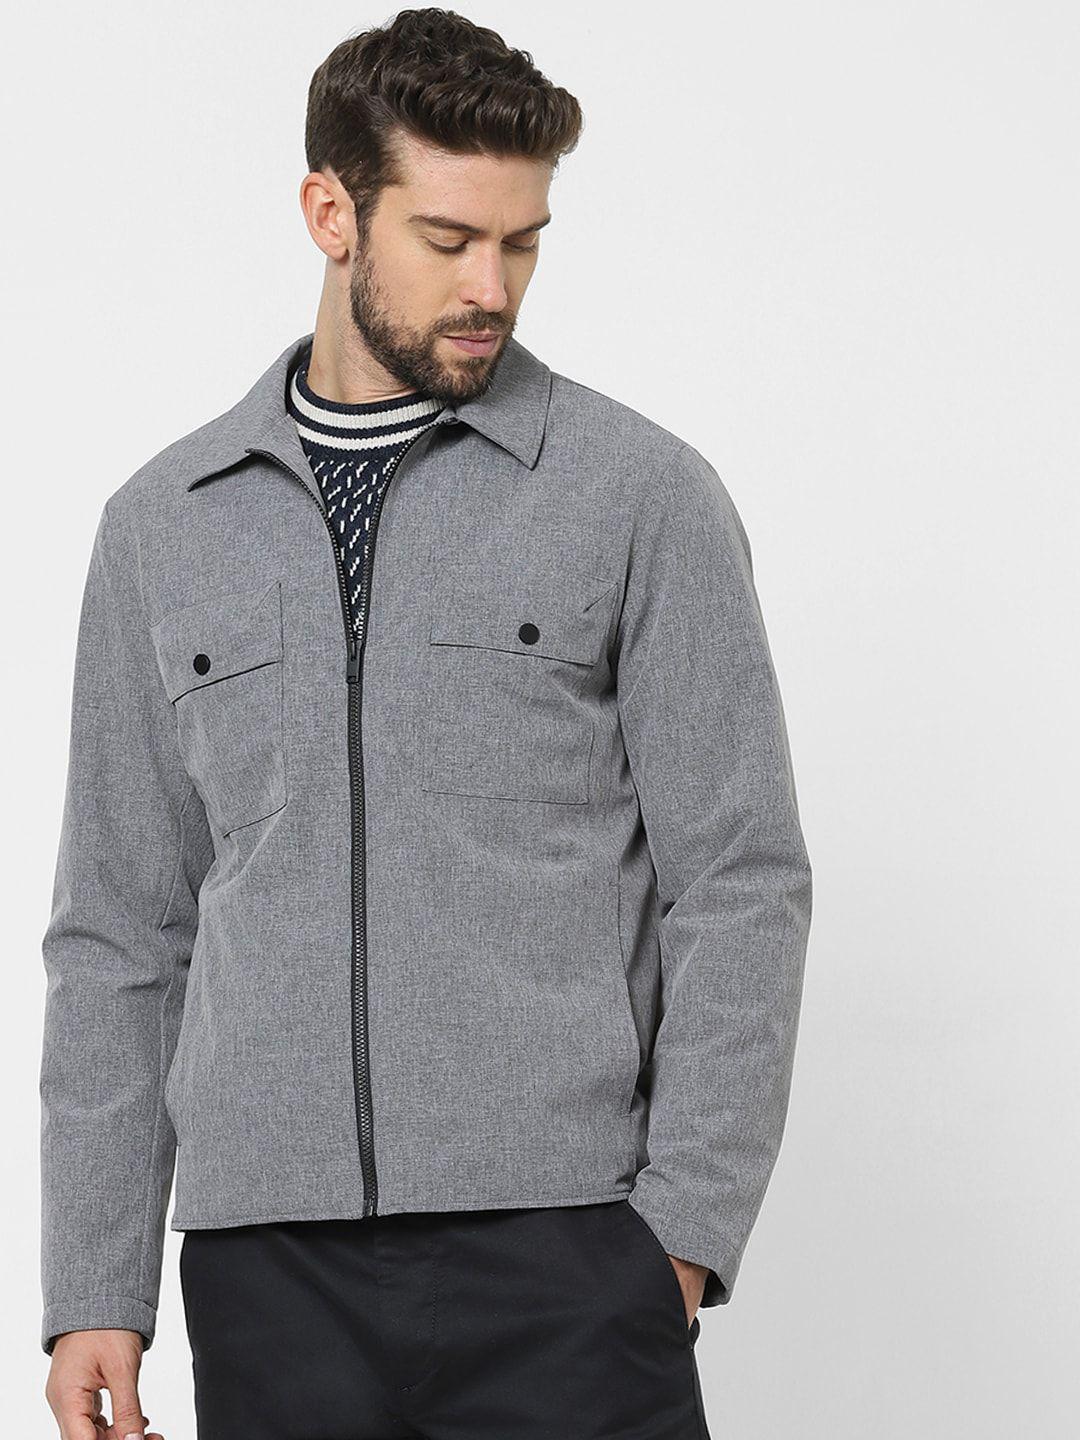 selected men grey self designed tailored jacket